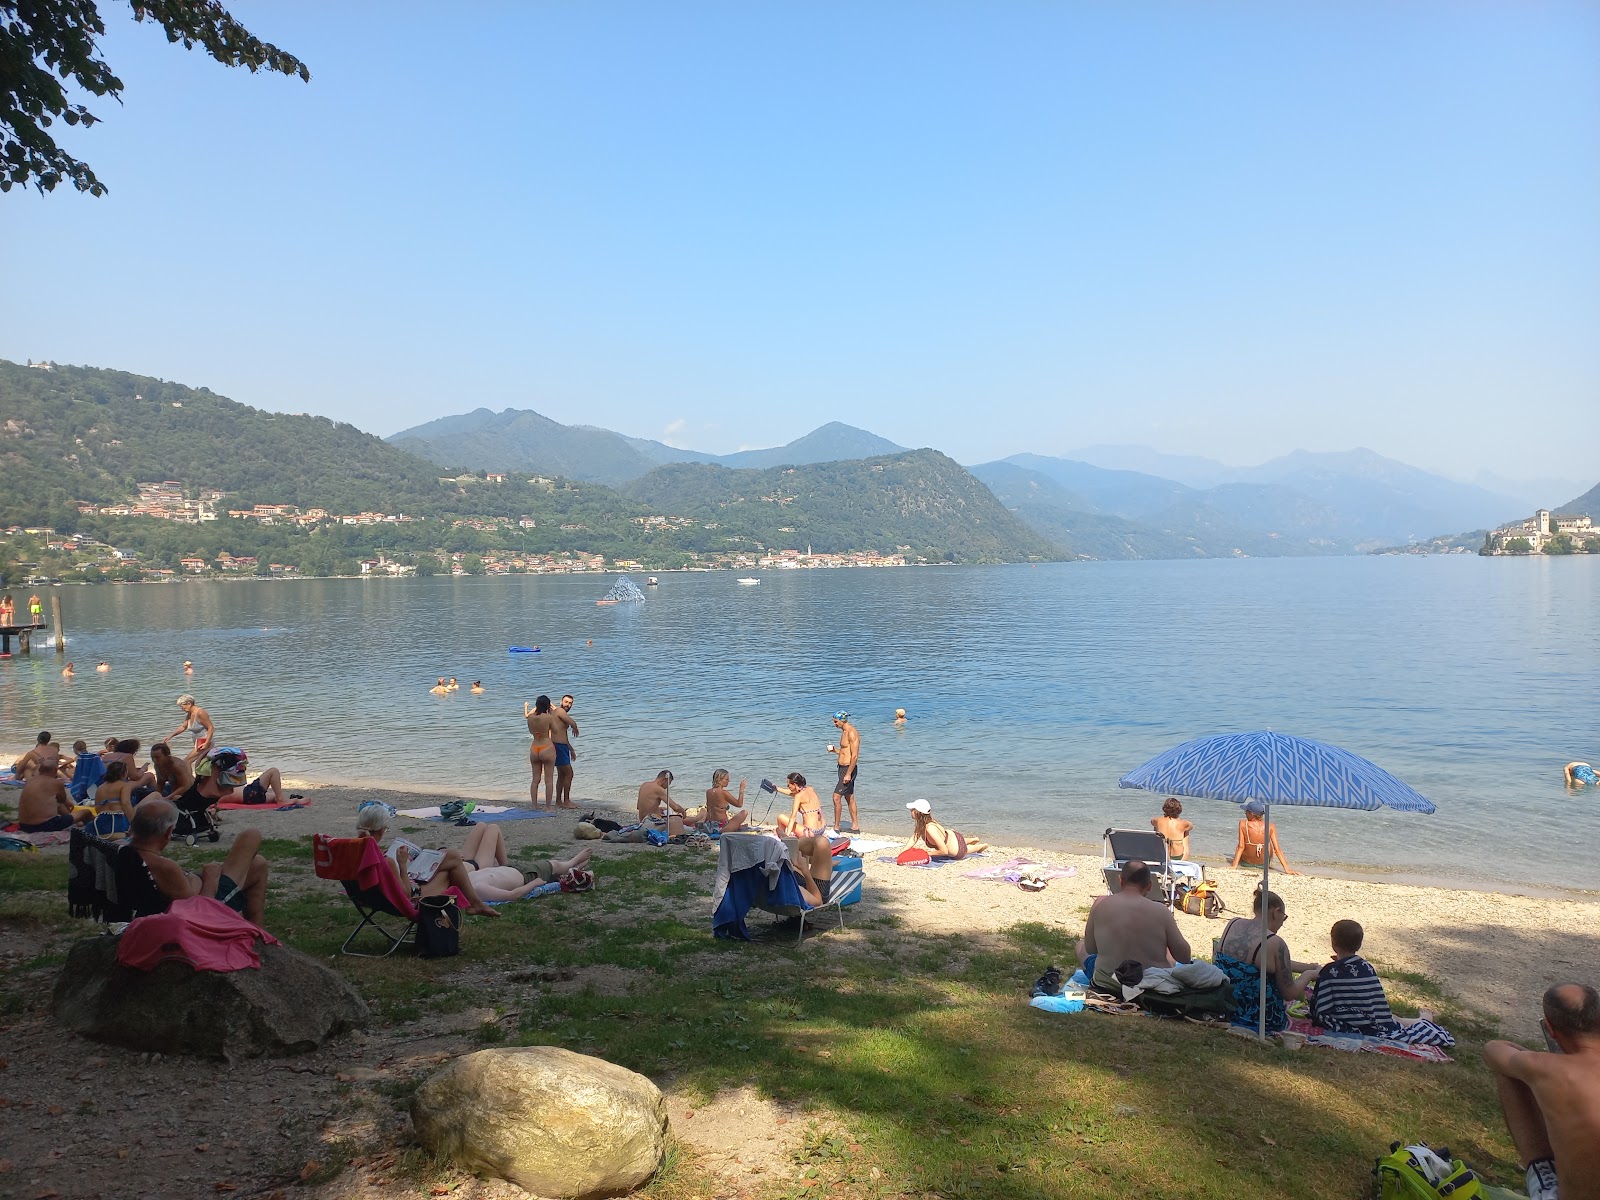 Foto de Spiaggia Prarolo - lugar popular entre os apreciadores de relaxamento